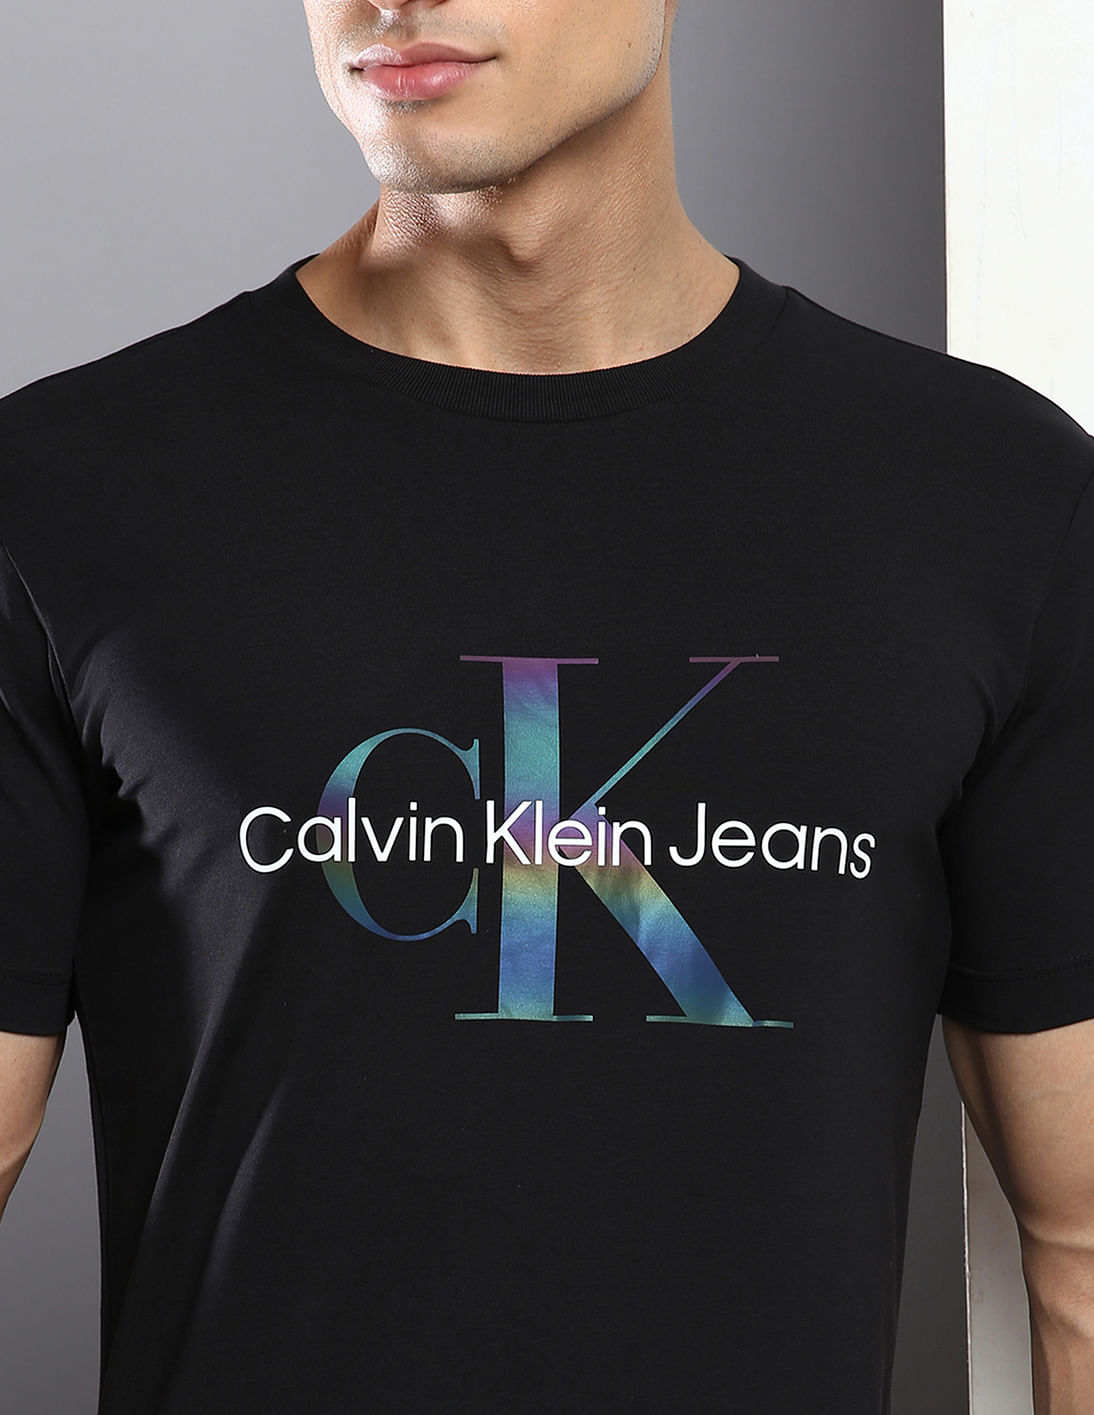 Calvin Klein Jeans Men's Garment-Dyed Monogrammed T-Shirt - Tofu